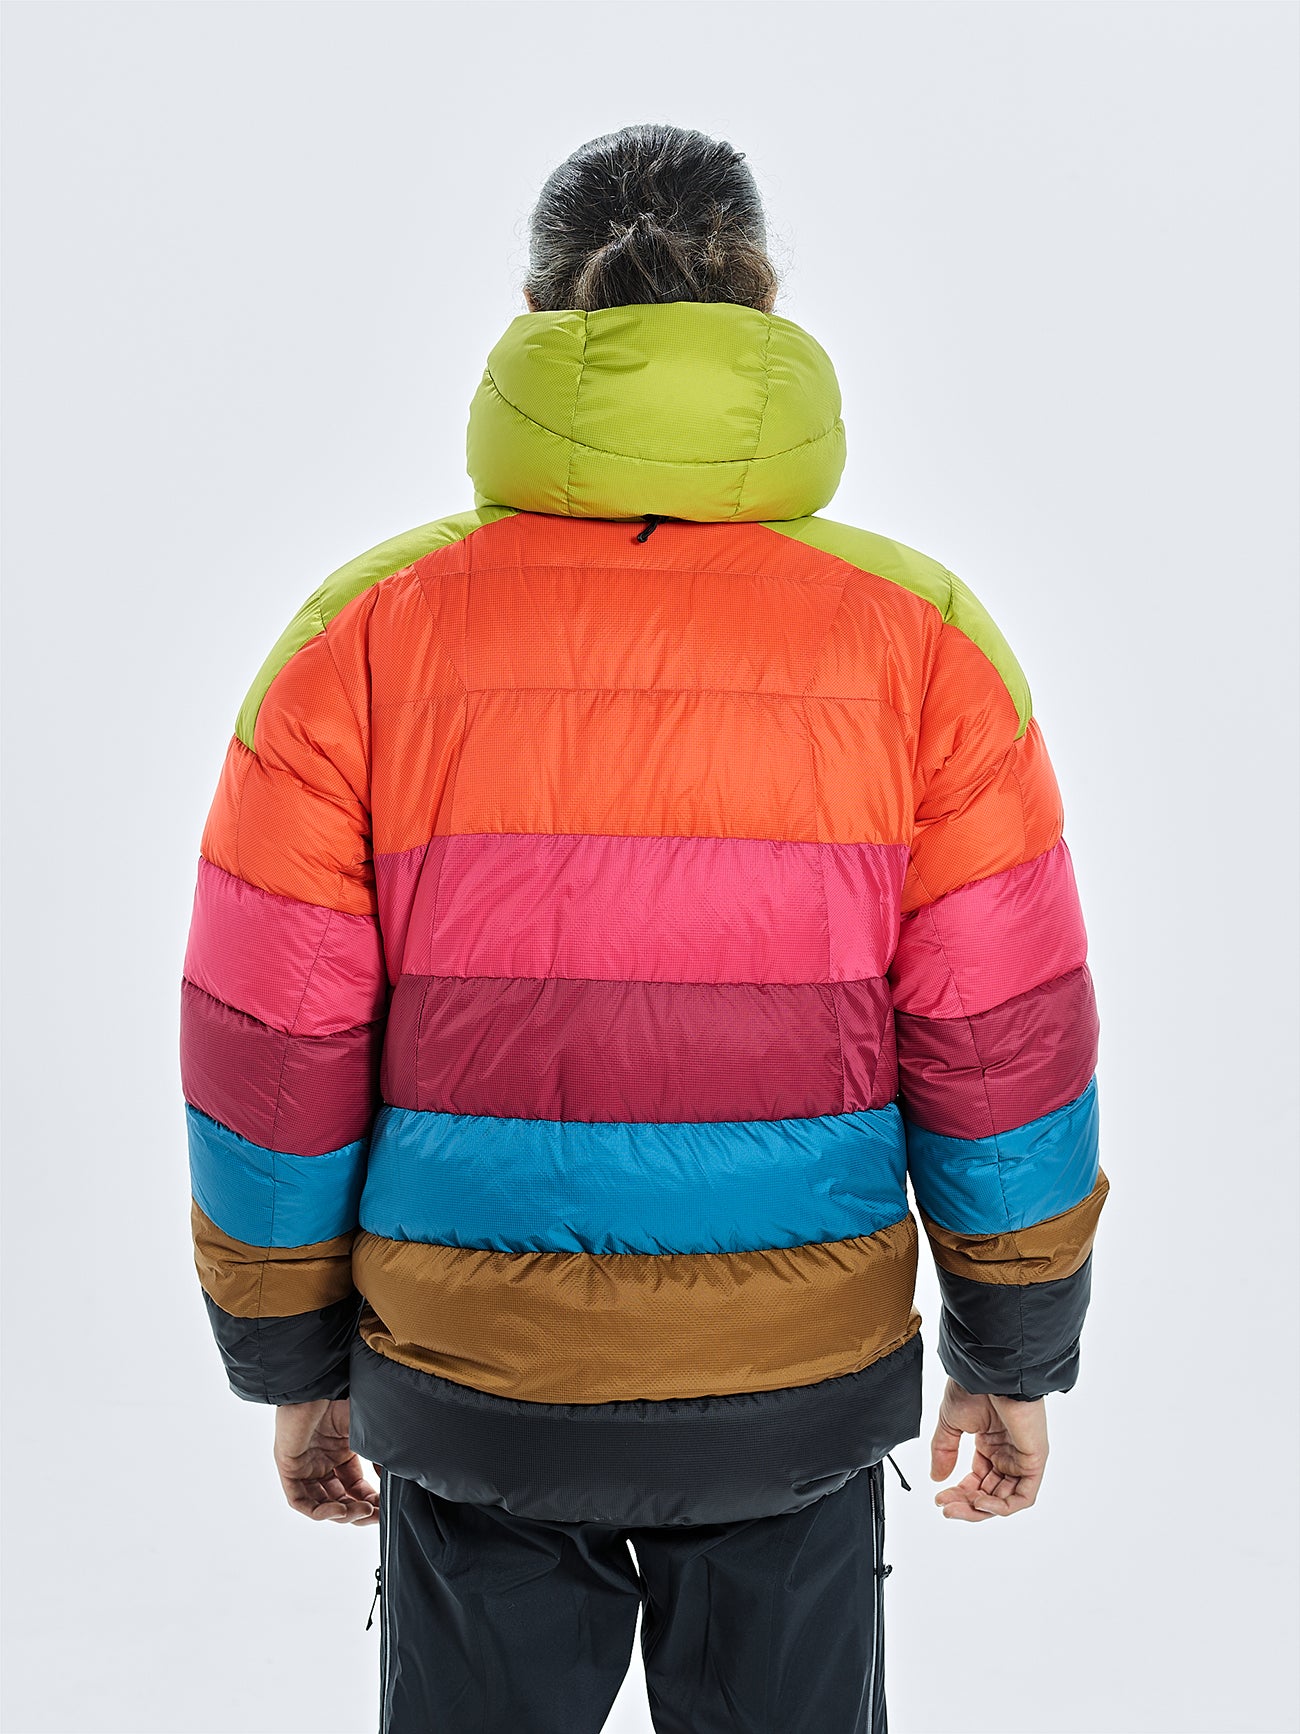 Men's Short Down Jacket, Autumn and Winter Thermal Tops, Baseball Uniform  Thermal Jacket, 4 Colors Available (Color : Khaki, Size : Medium)